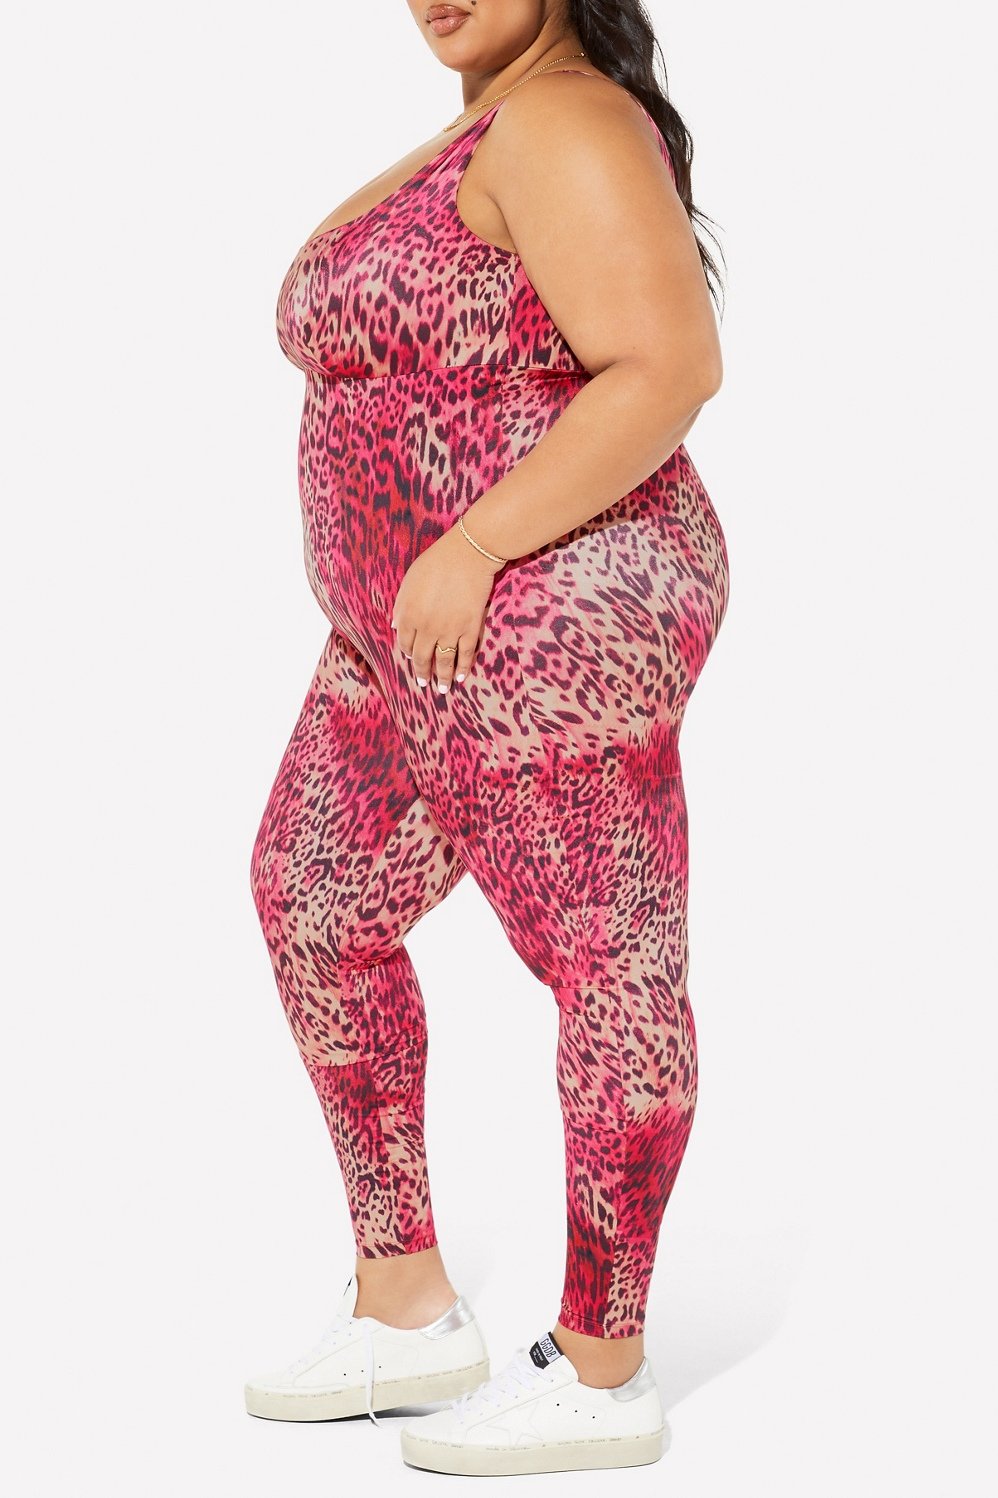 Yitty Fabletics Headliner Shaping High Waist Legging Pink Leopard Kitty,  XXL NWT